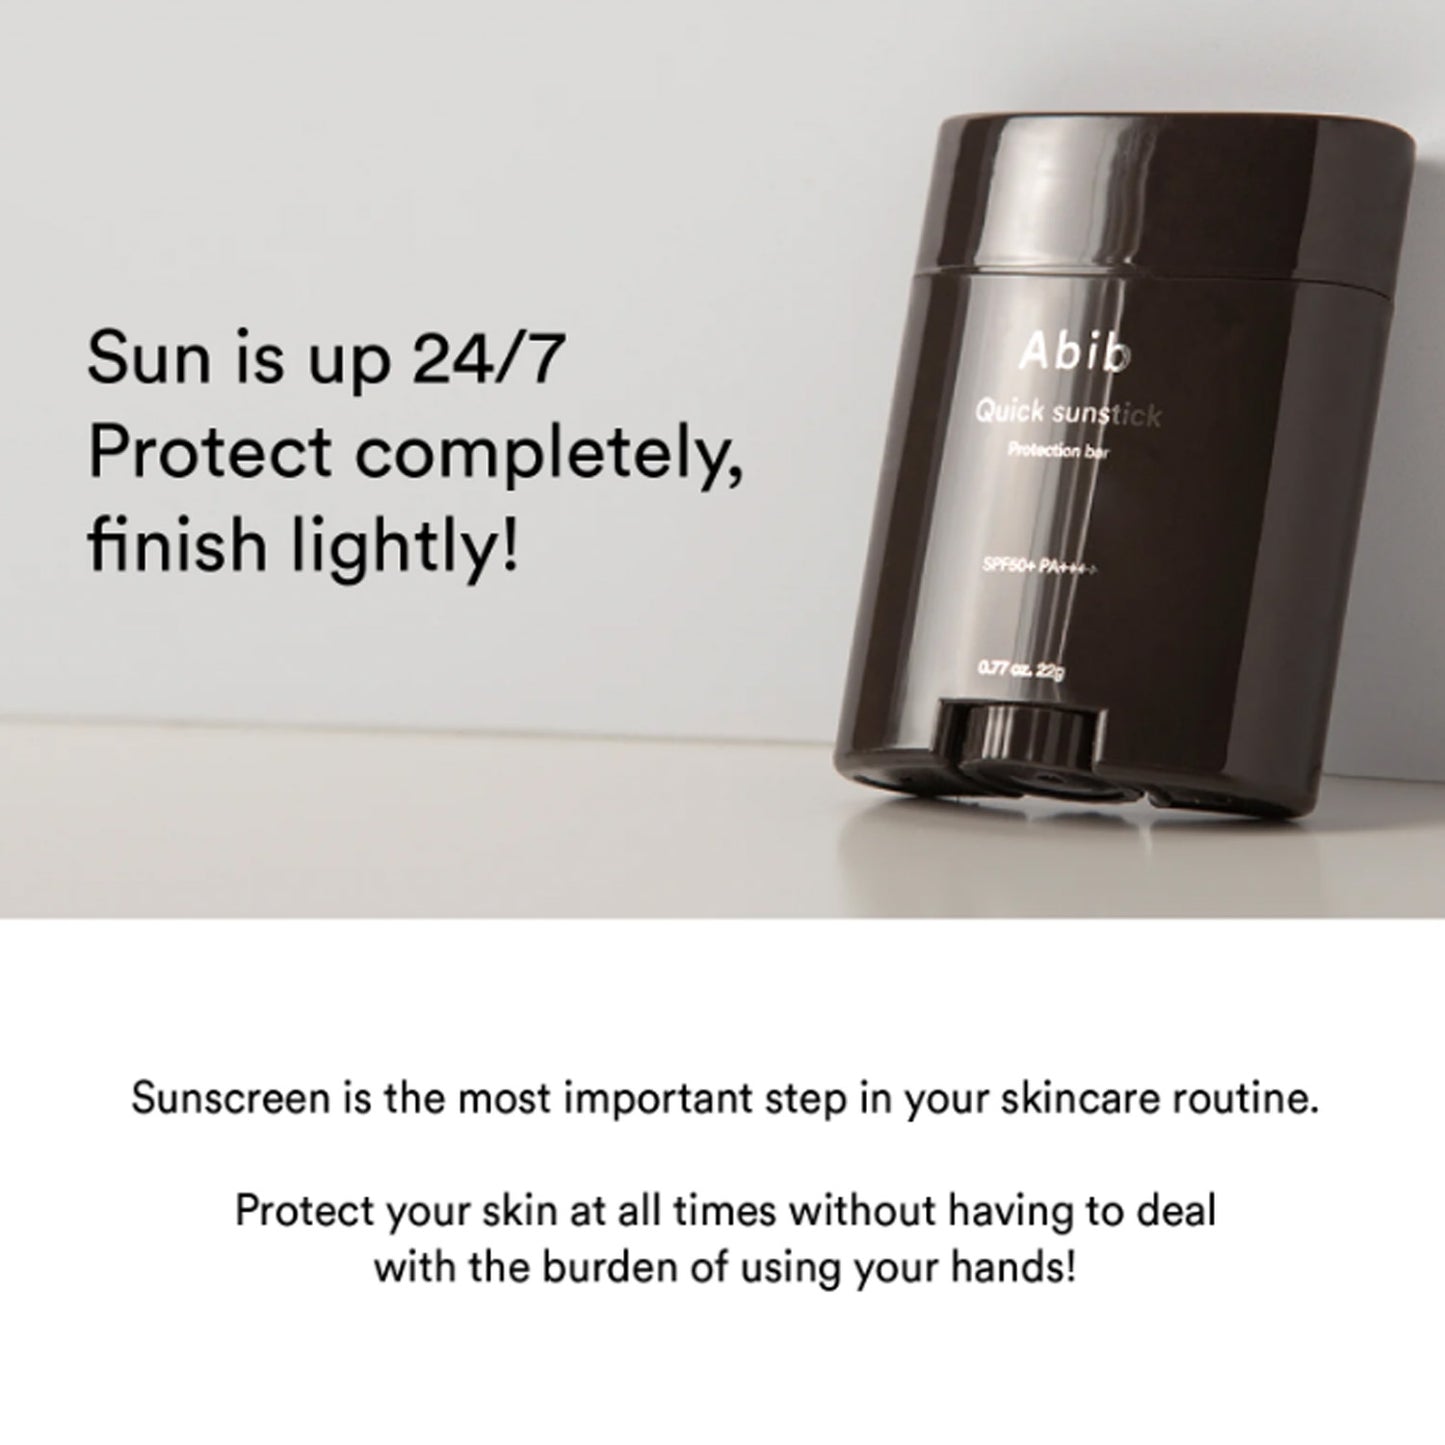 [Abib] Quick Sunstick Protection Bar SPF50+ PA++++ 22ml